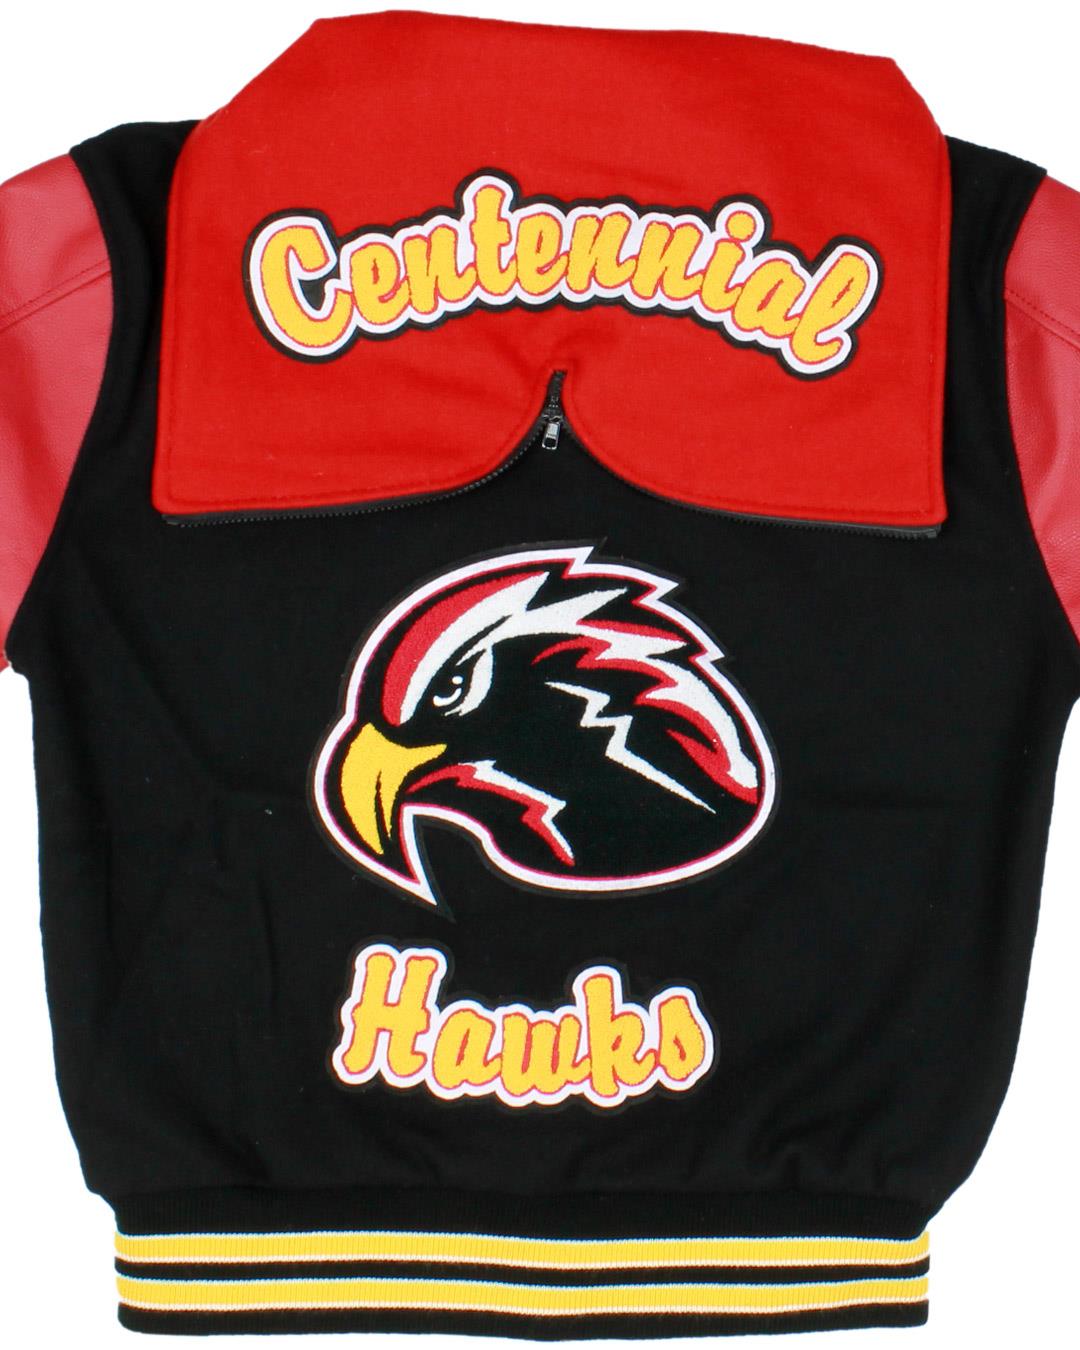 Centennial High School Letter Jacket - Las Cruces NM - Back